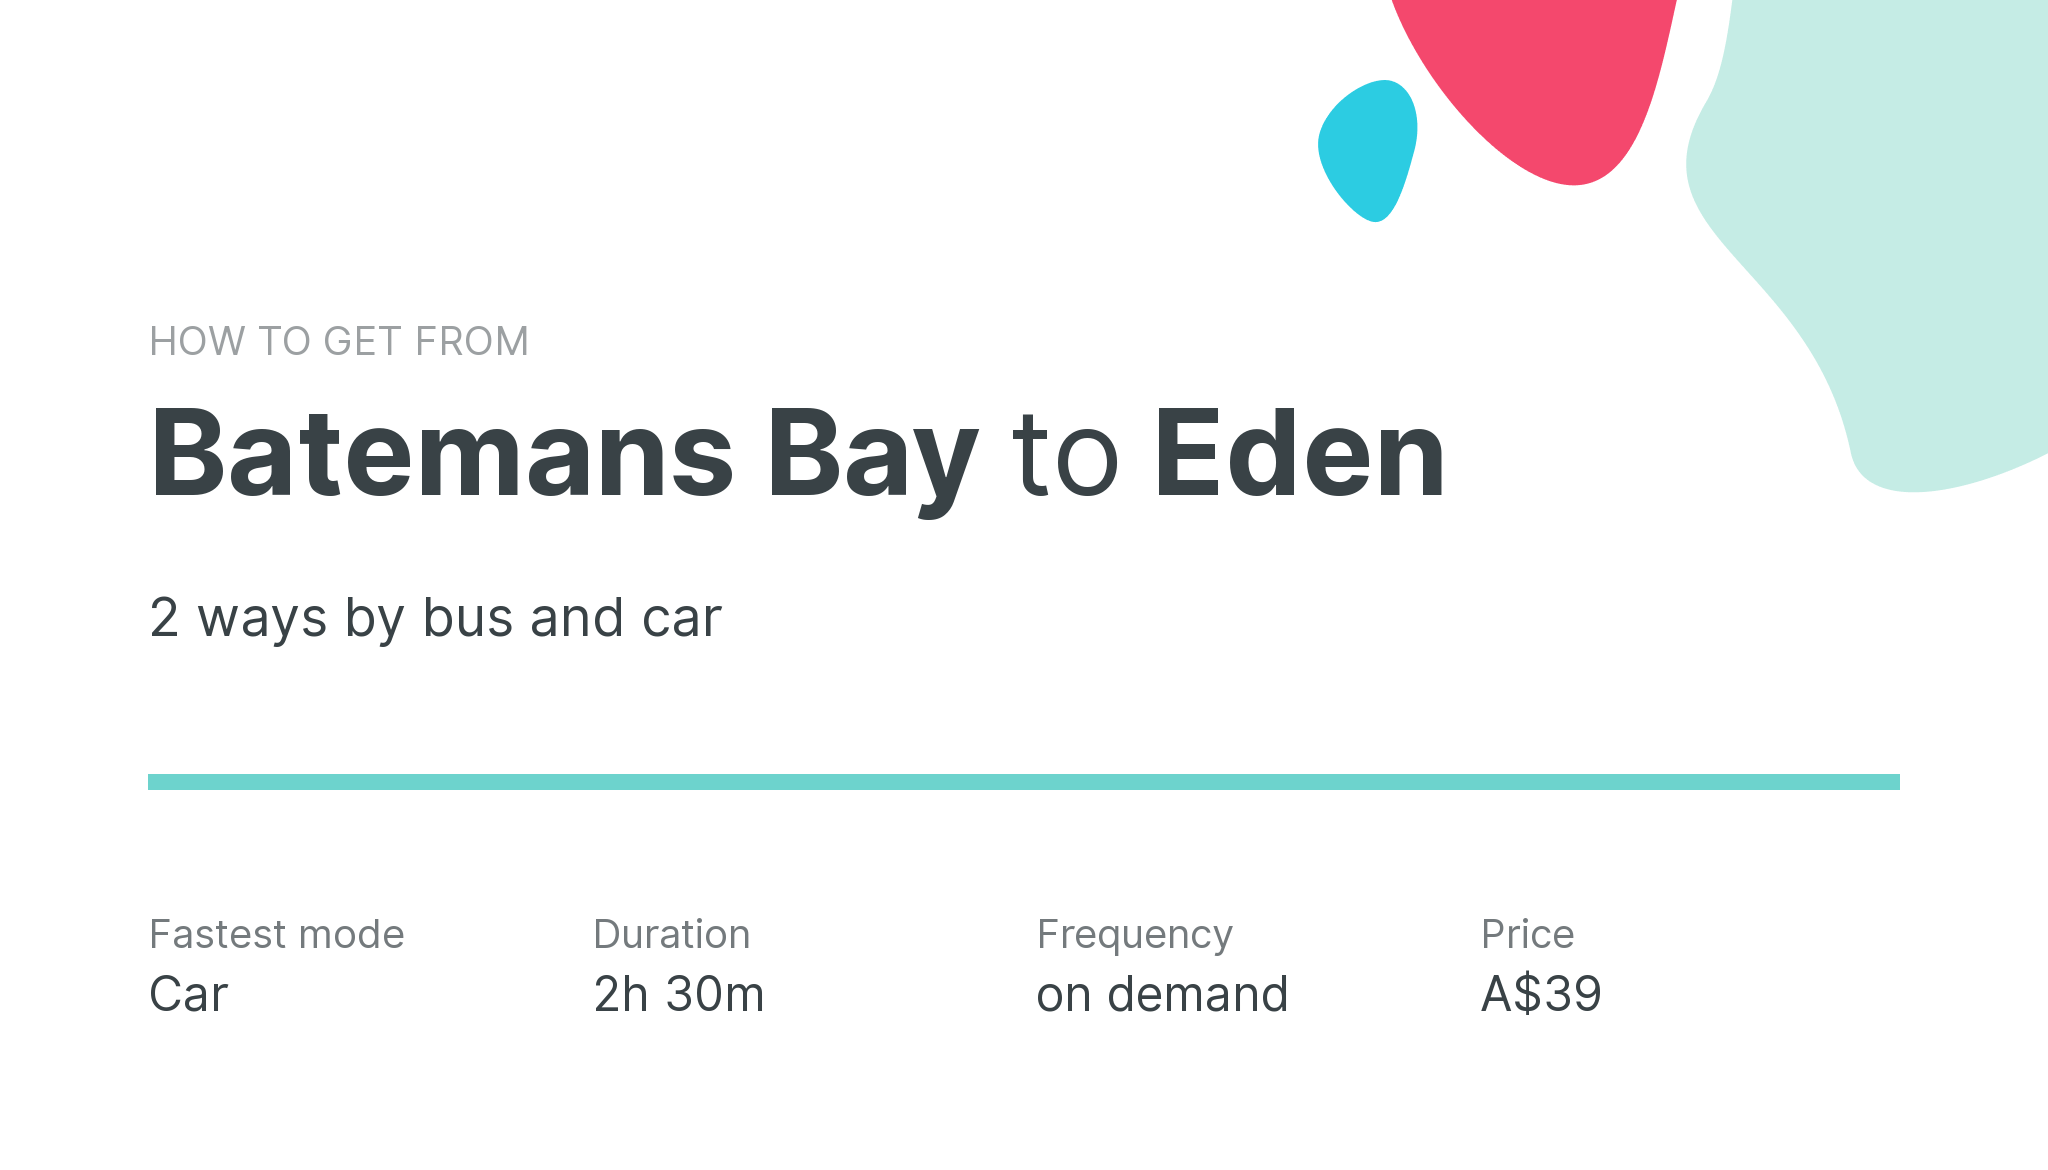 How do I get from Batemans Bay to Eden